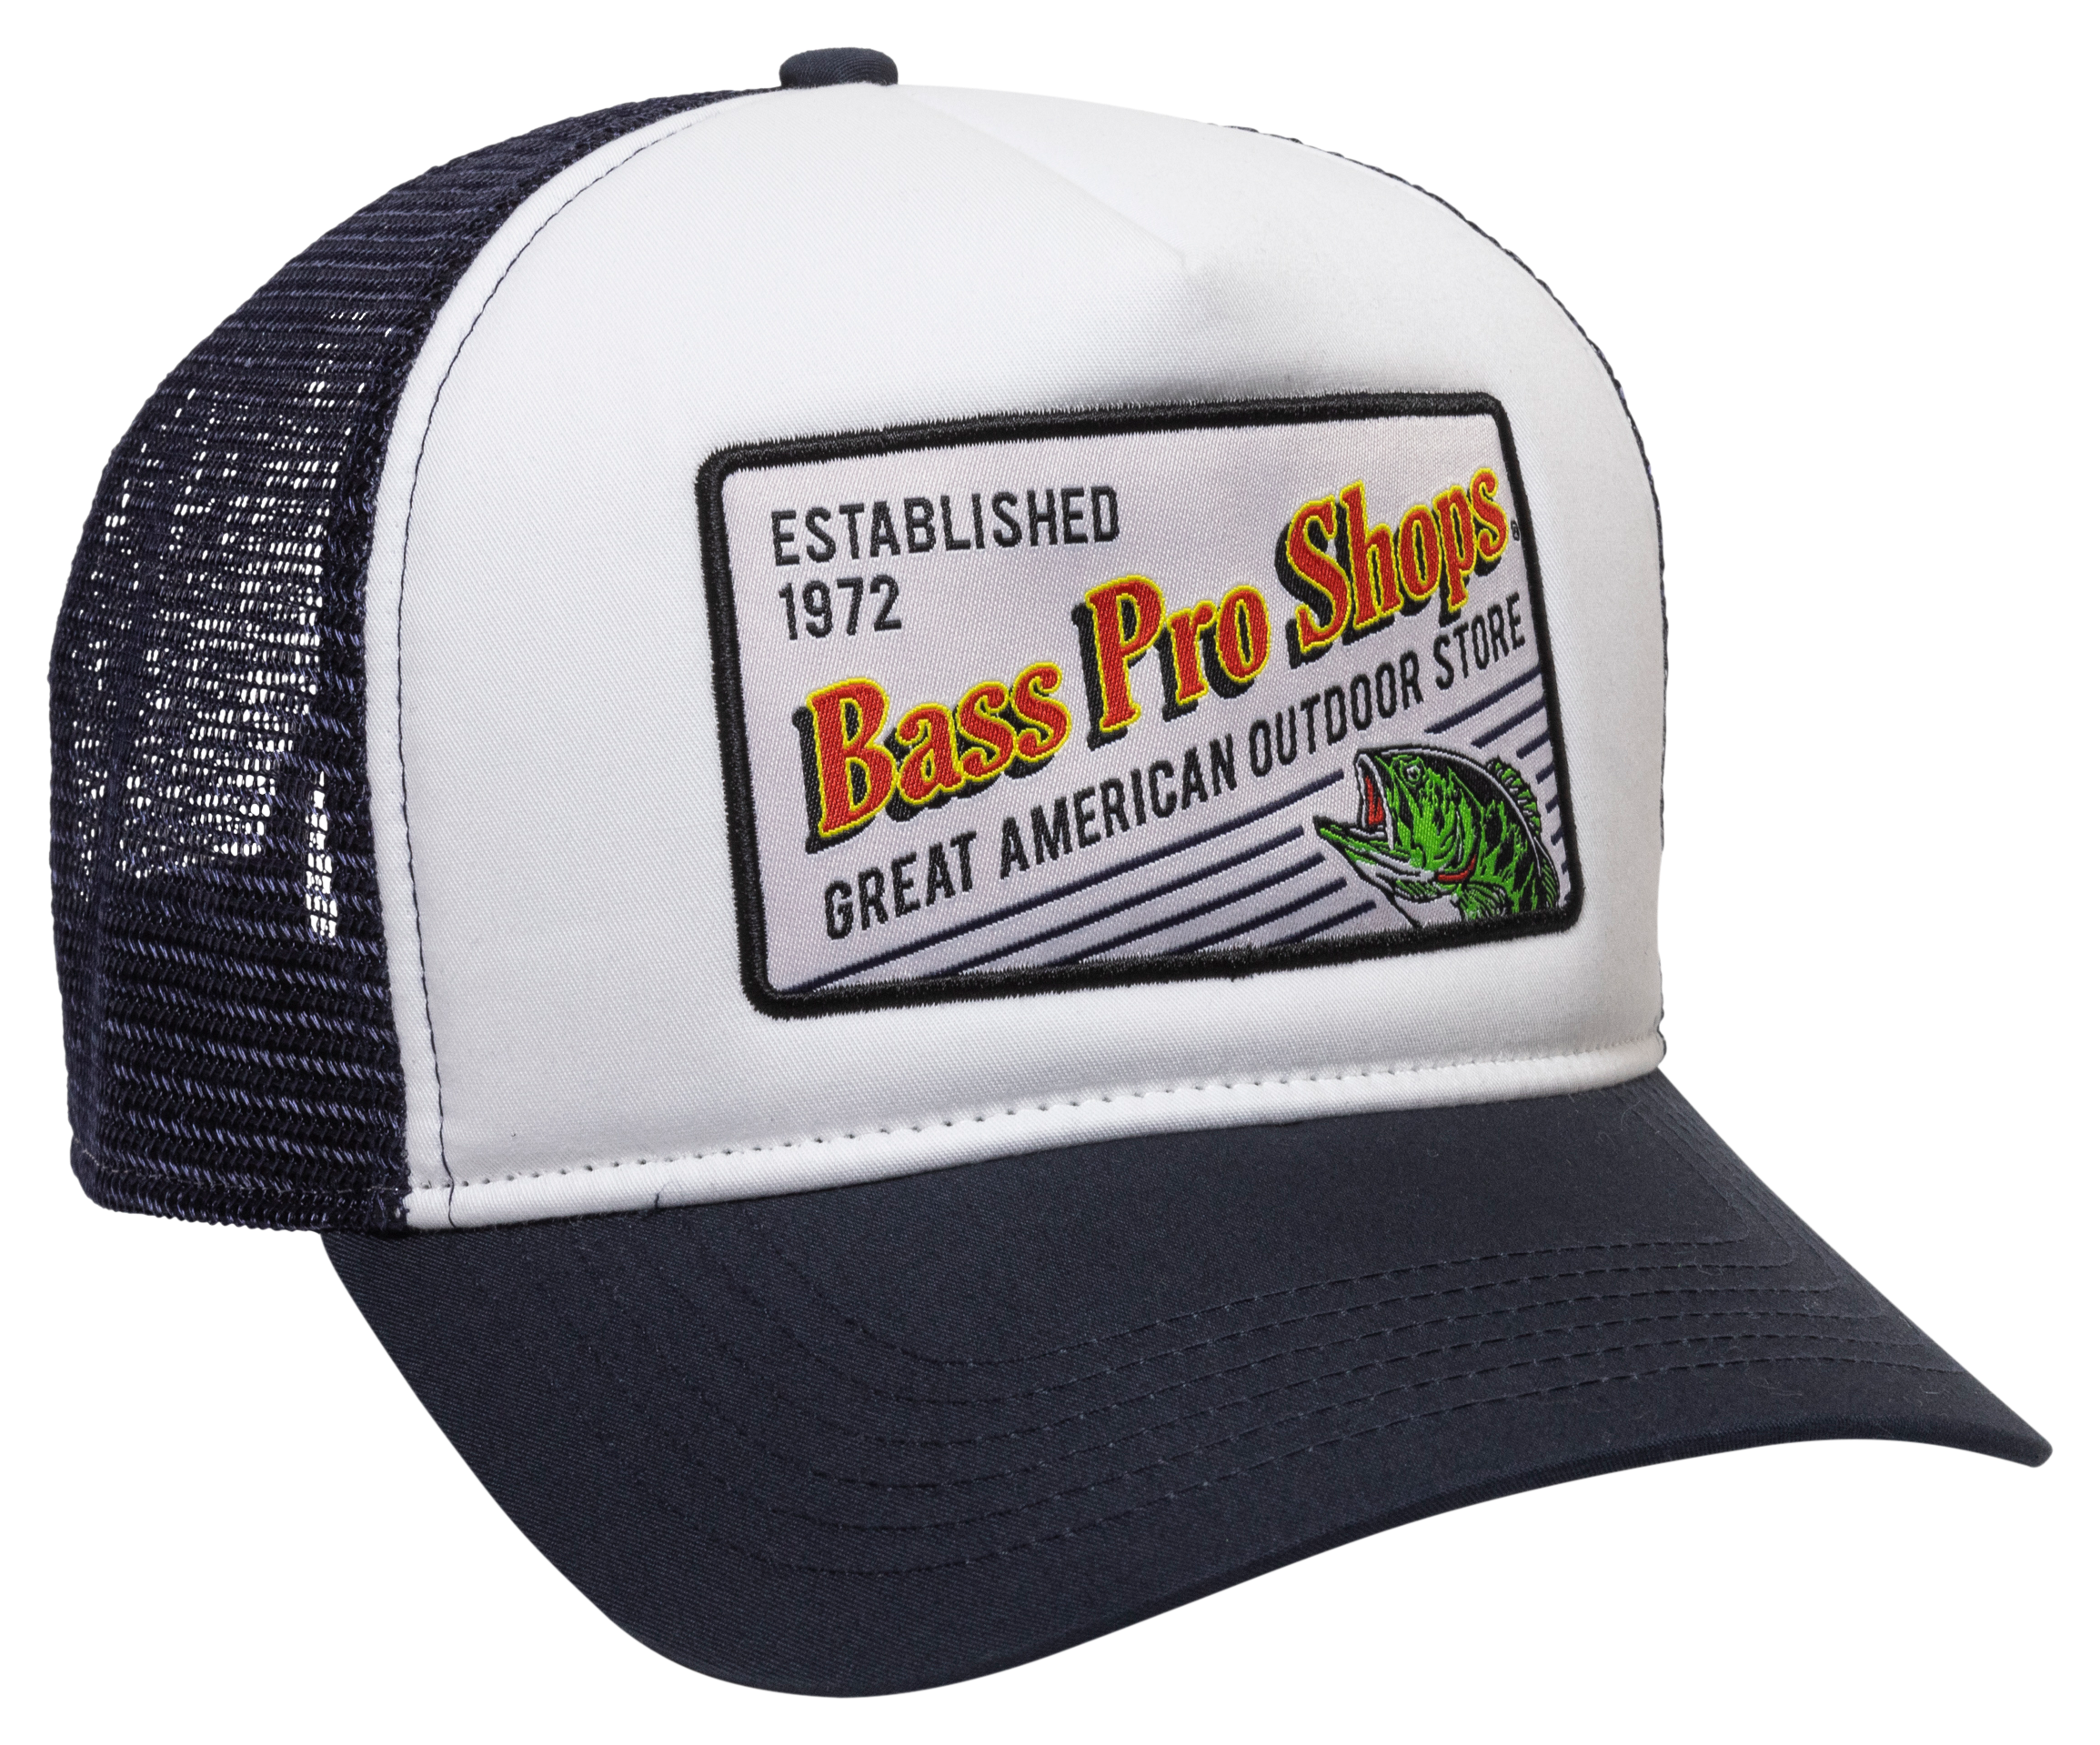 Vintage bass pro shops trucker hat